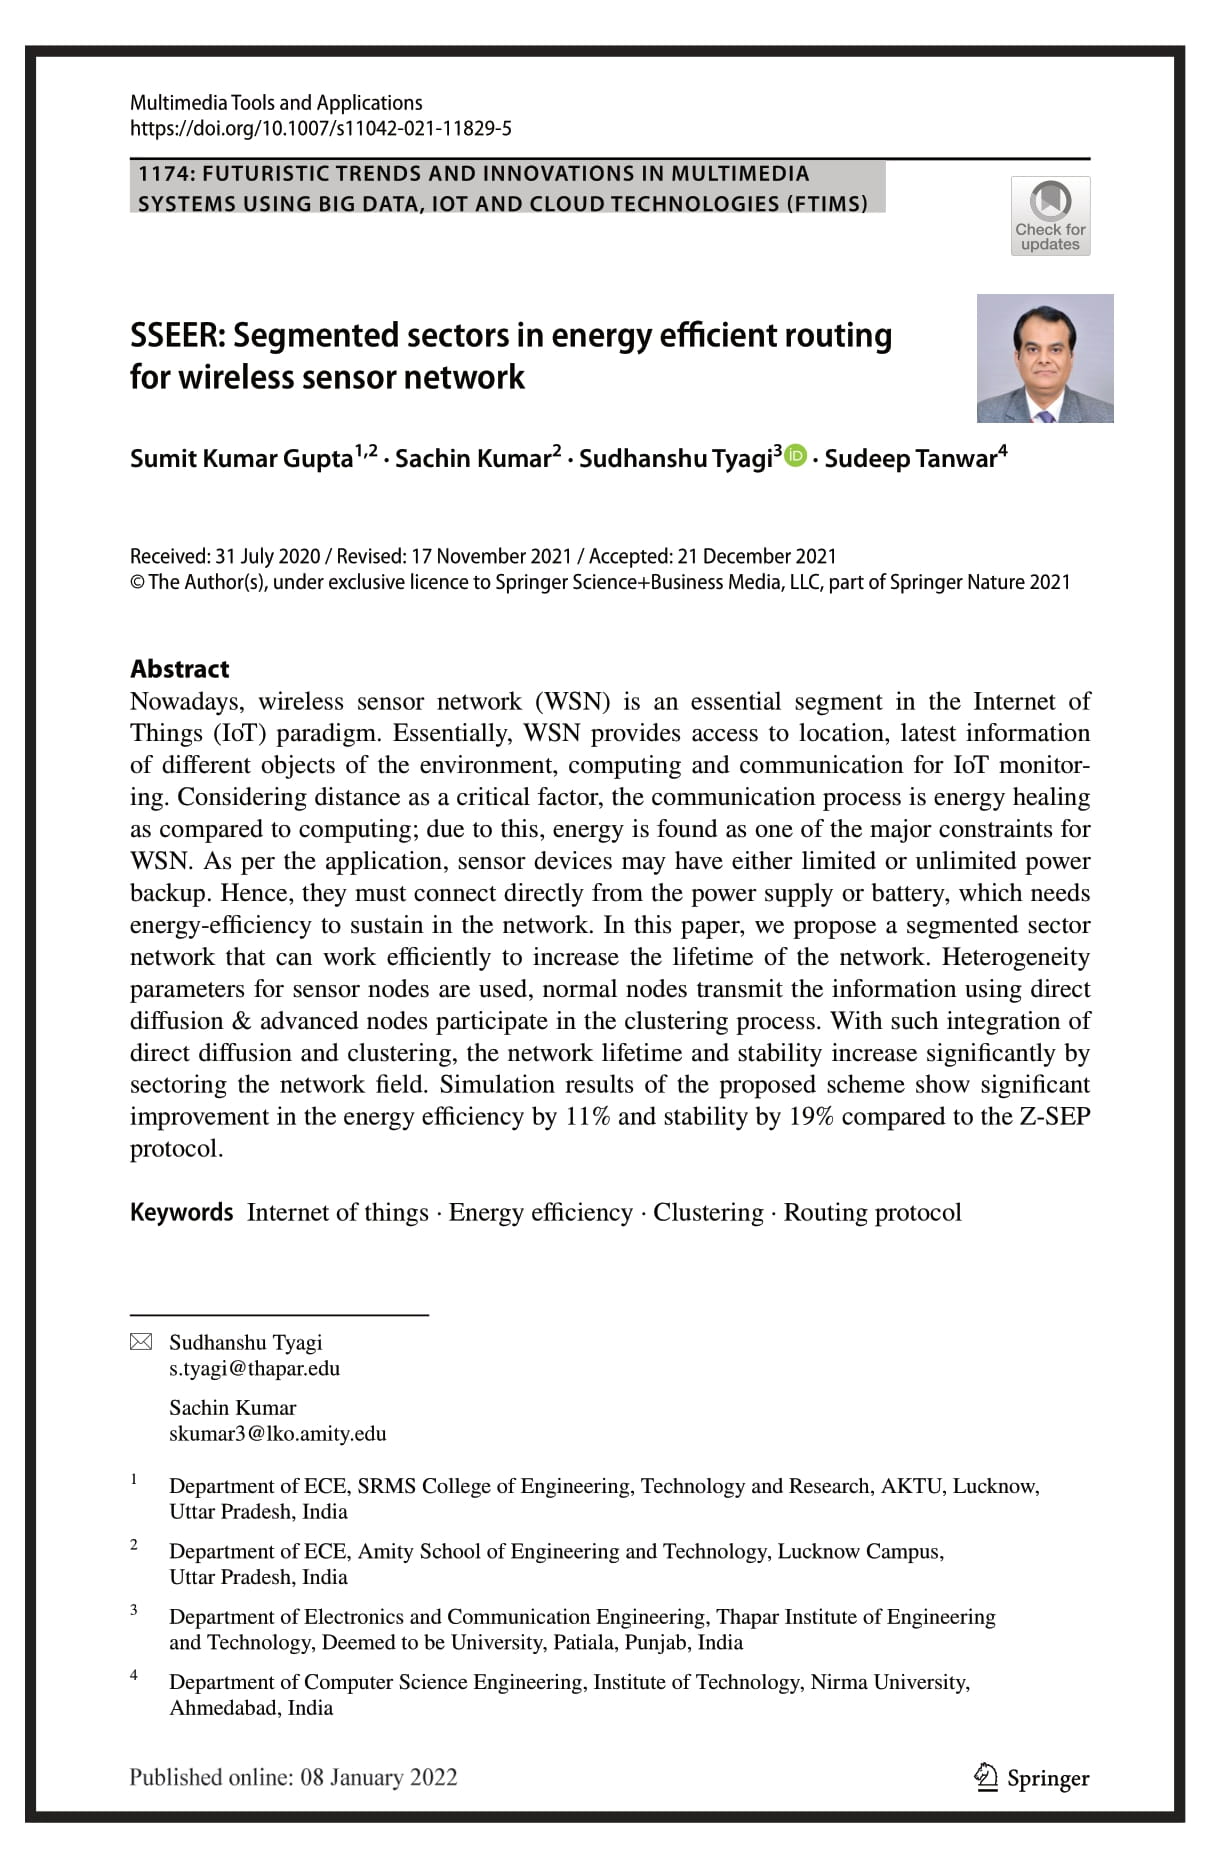 SSEER: Segmented sectors in energy-efficient routing for wireless sensor network